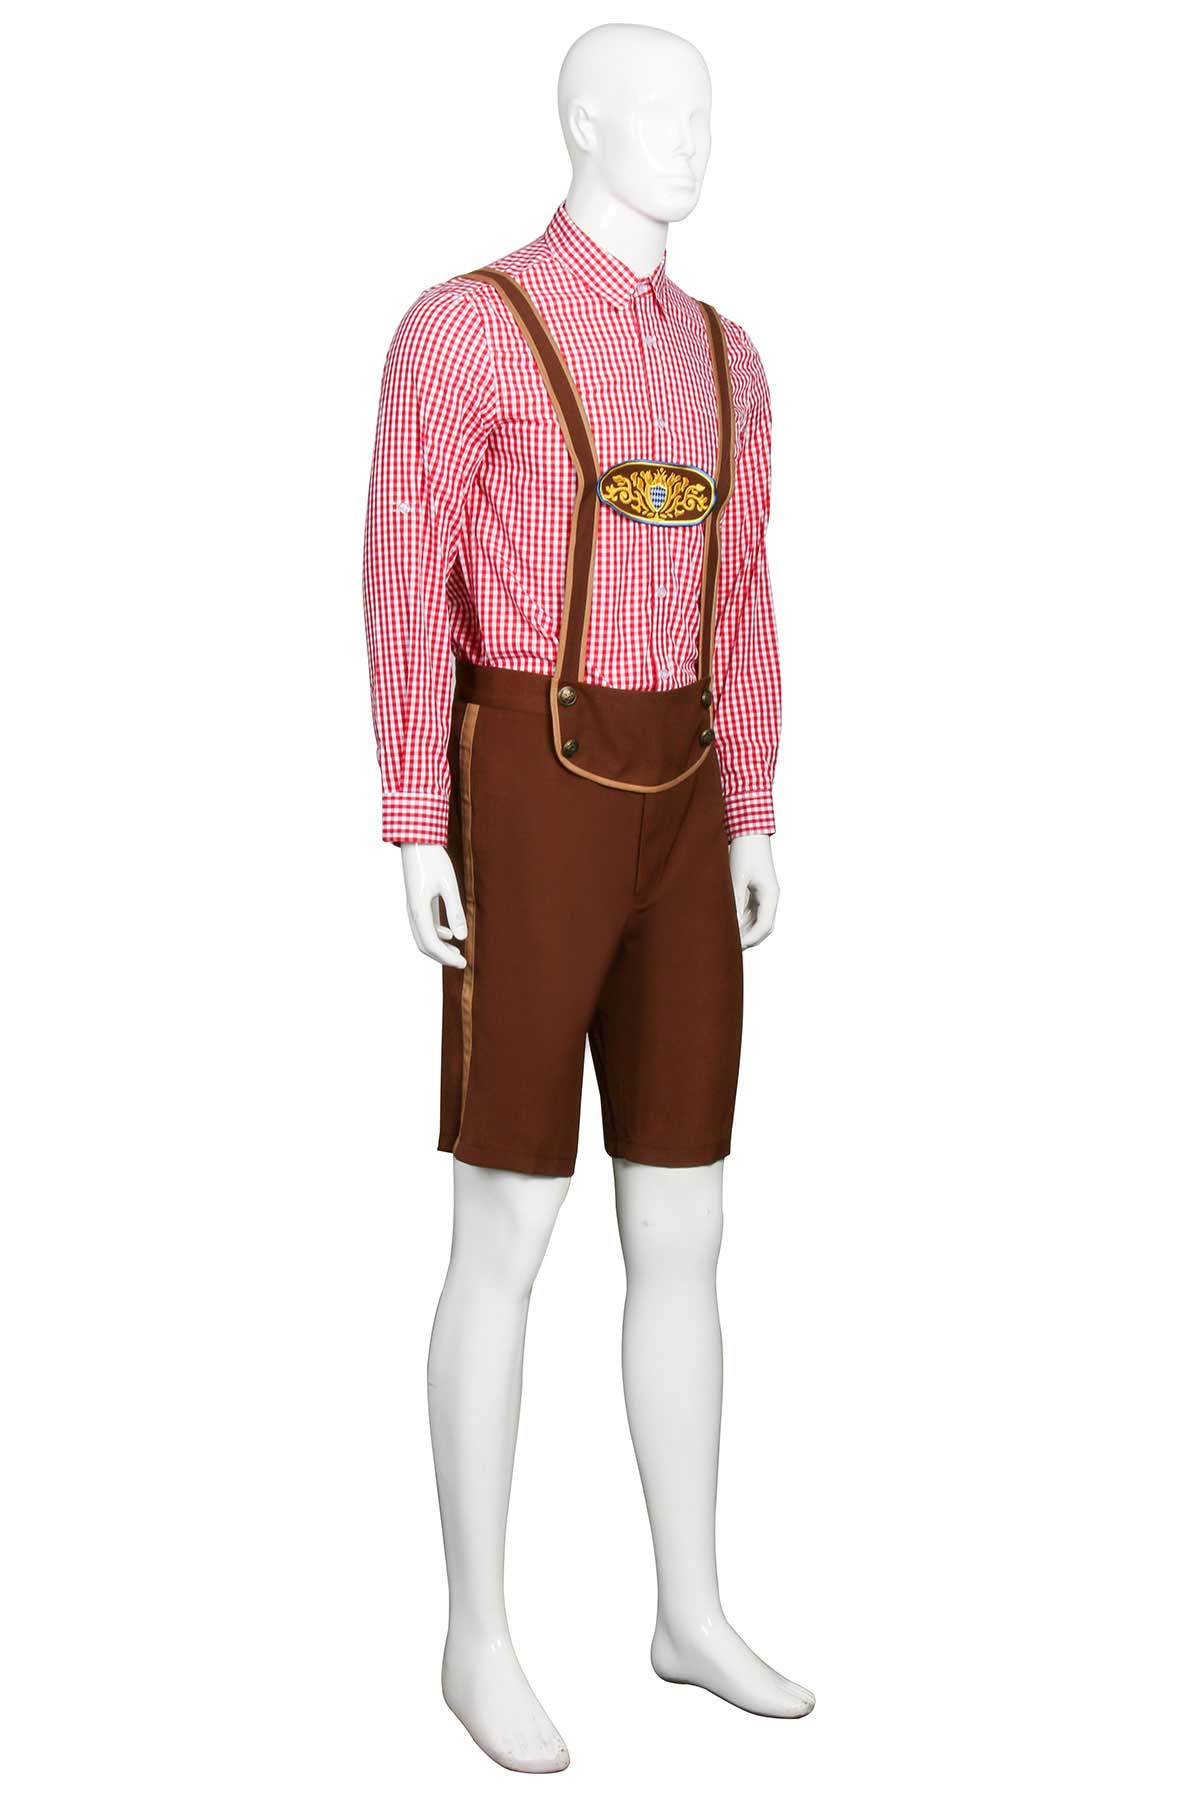 Bavarian Beer Lederhosen Oktoberfest Mens Costume Shirt Pants Suspenders-Takerlama